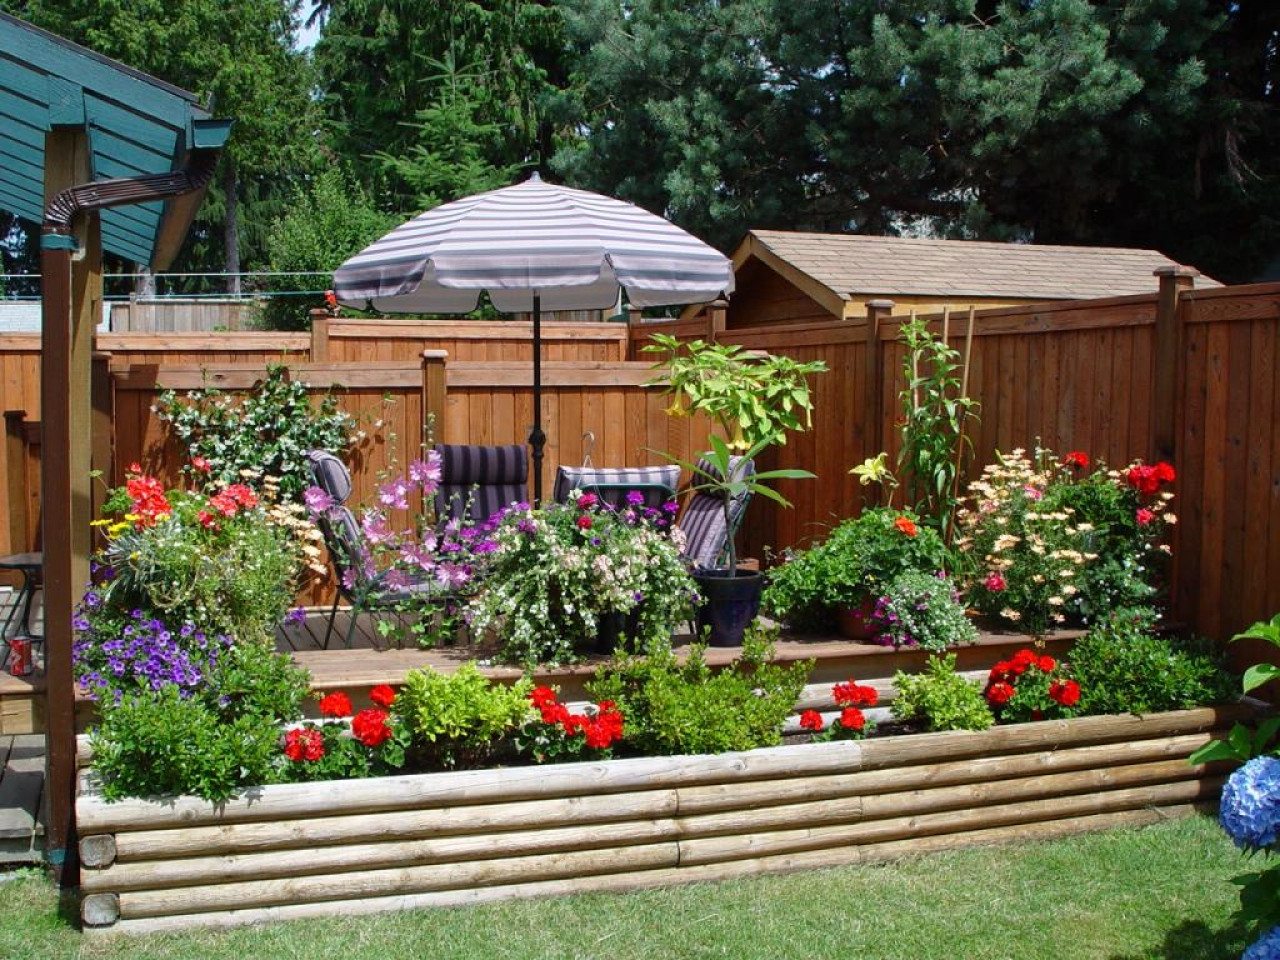 Best ideas about Small Patio Garden Ideas
. Save or Pin Patio landscaping small garden patio design ideas light Now.